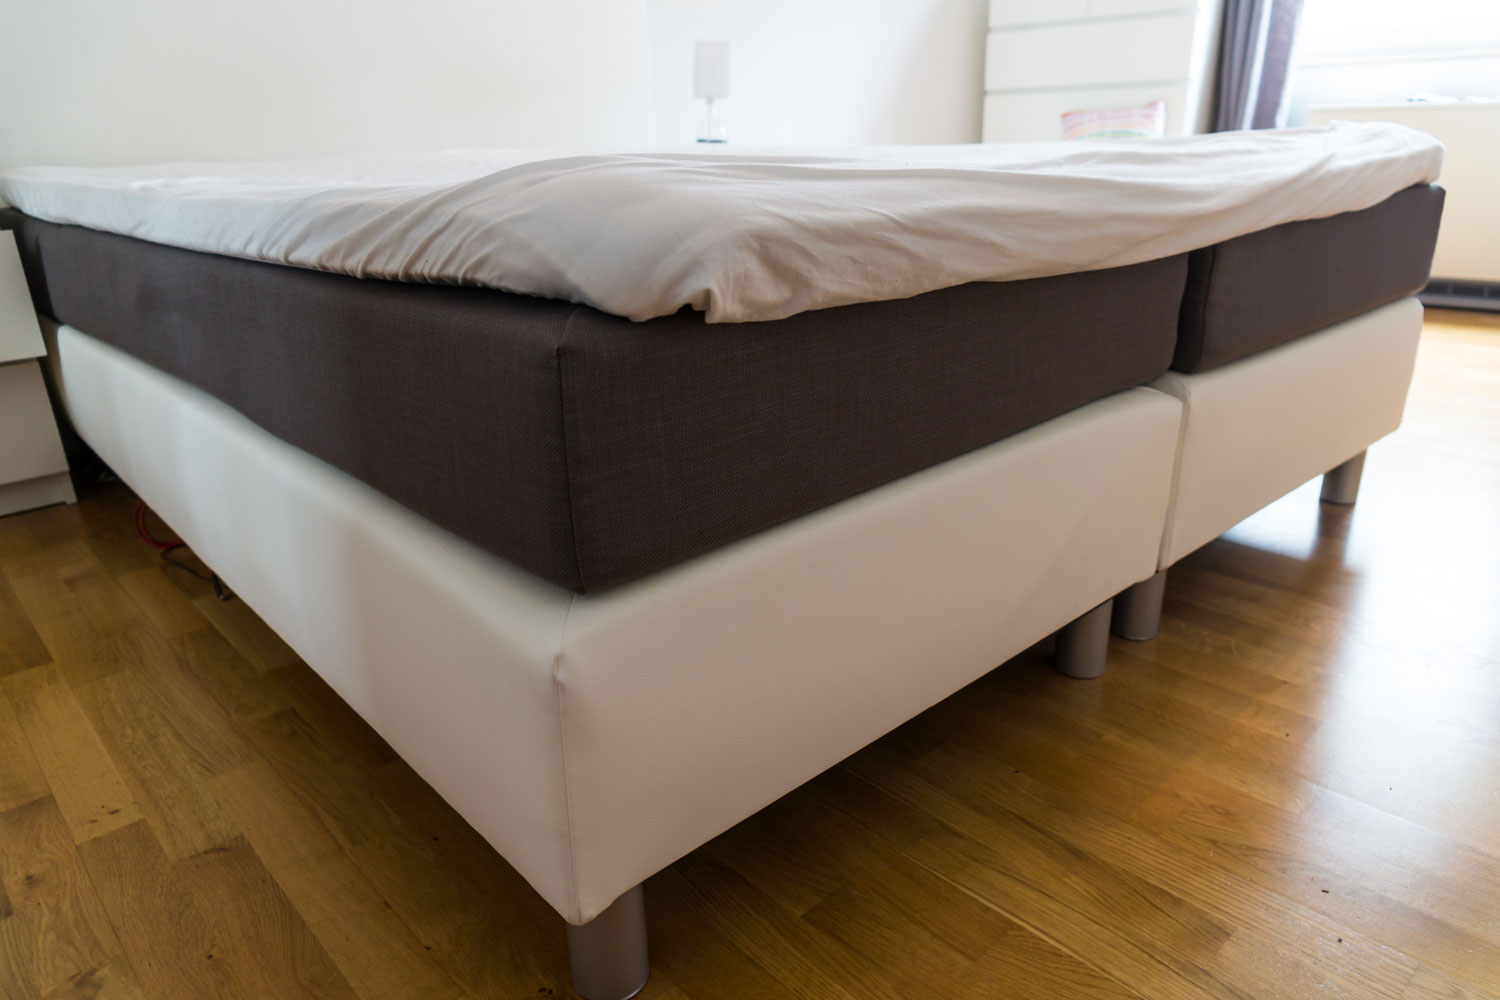 A black and white box spring mattress